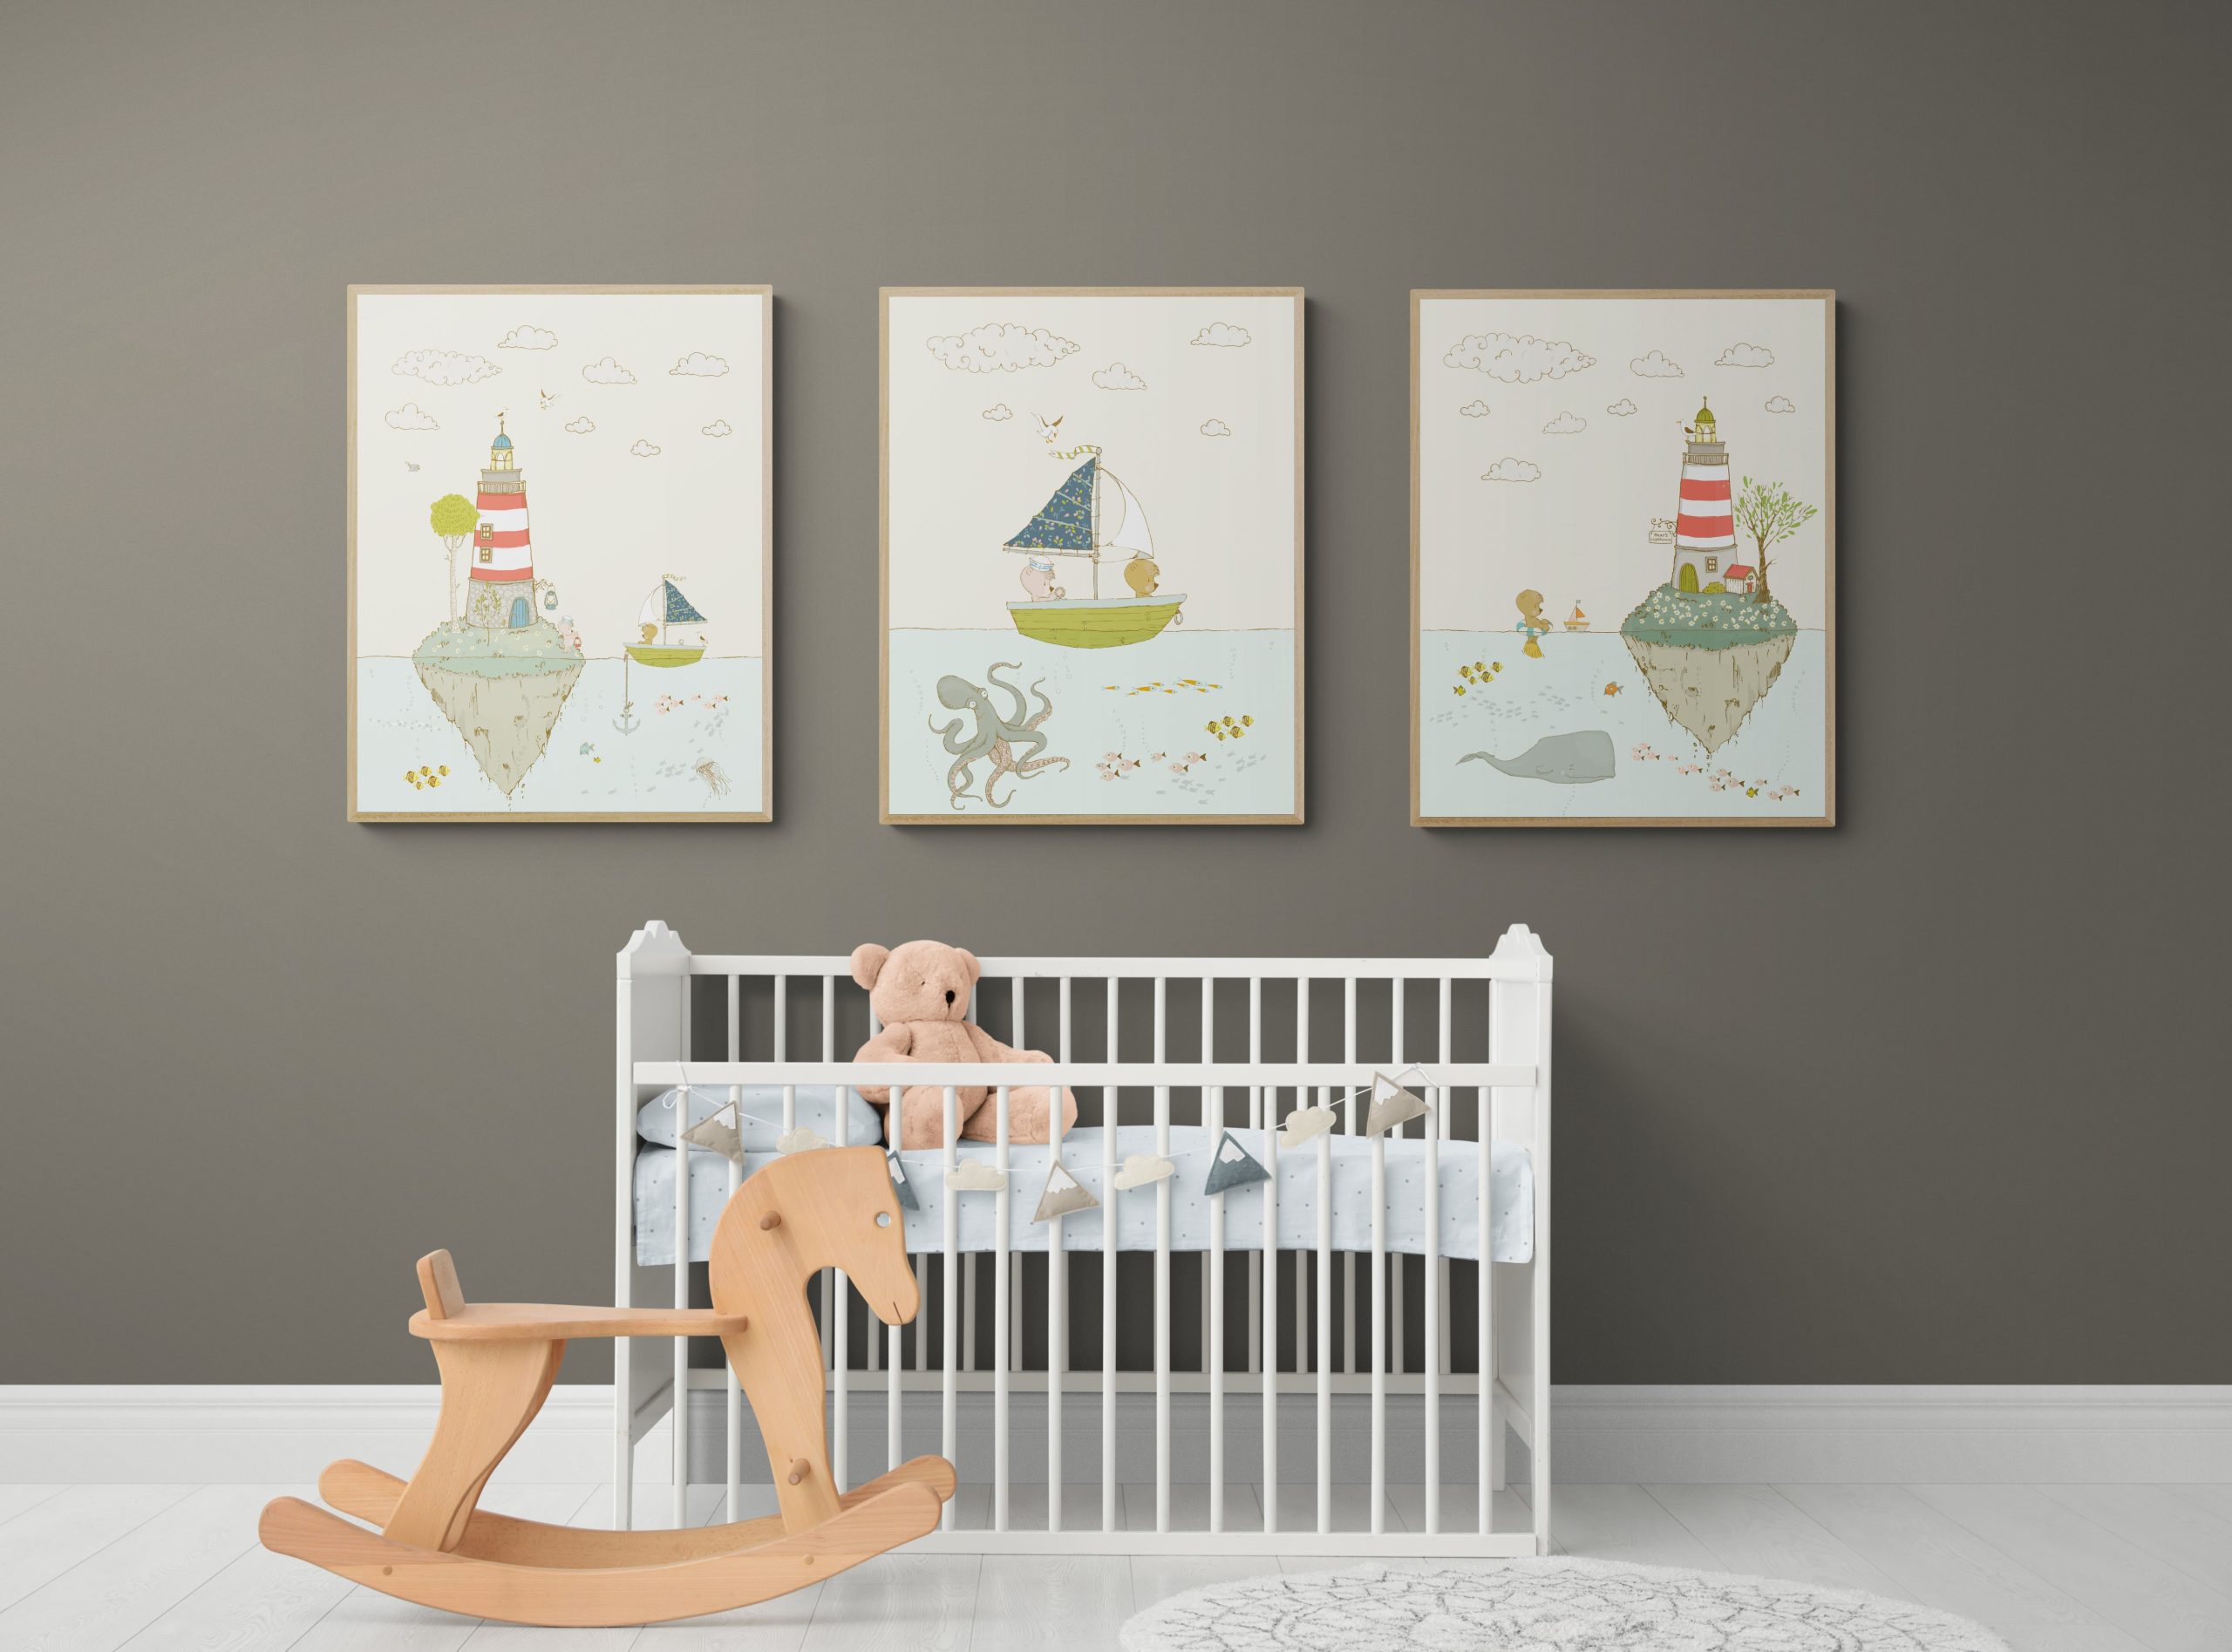 Set Sail with Adorable Nautical-Themed Nursery Wall Art!